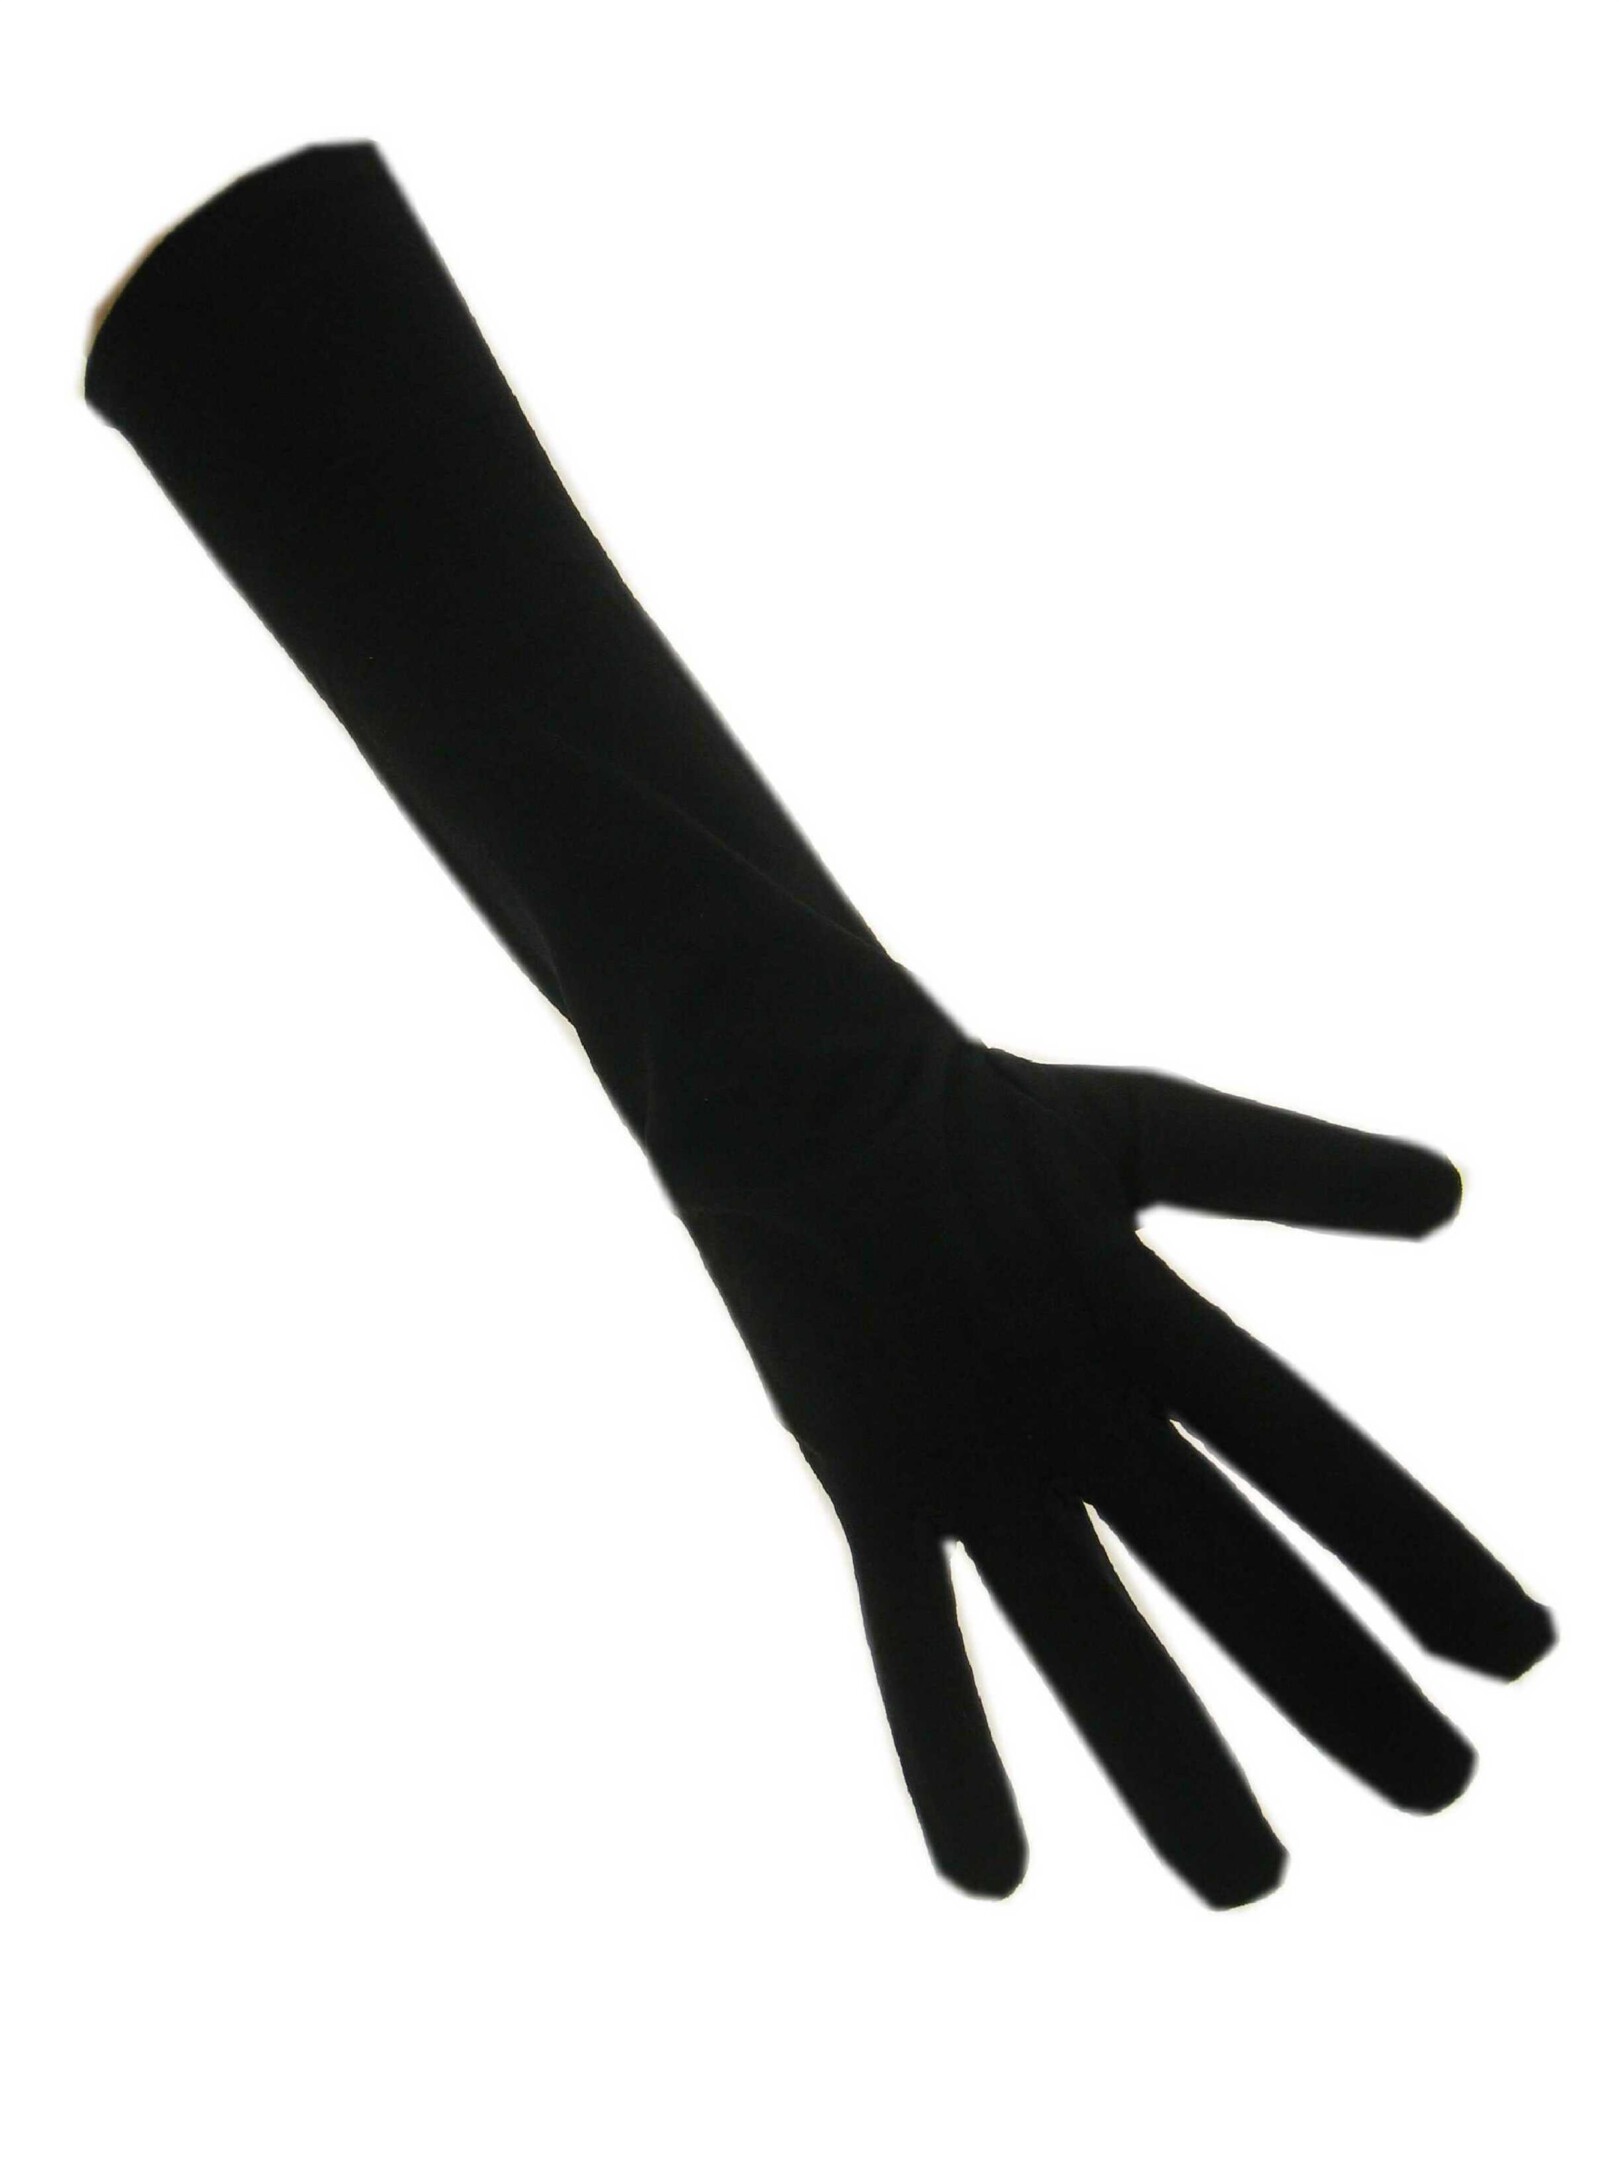 Handschoenen stretch zwart luxe nylon 40 cm. (Piet)